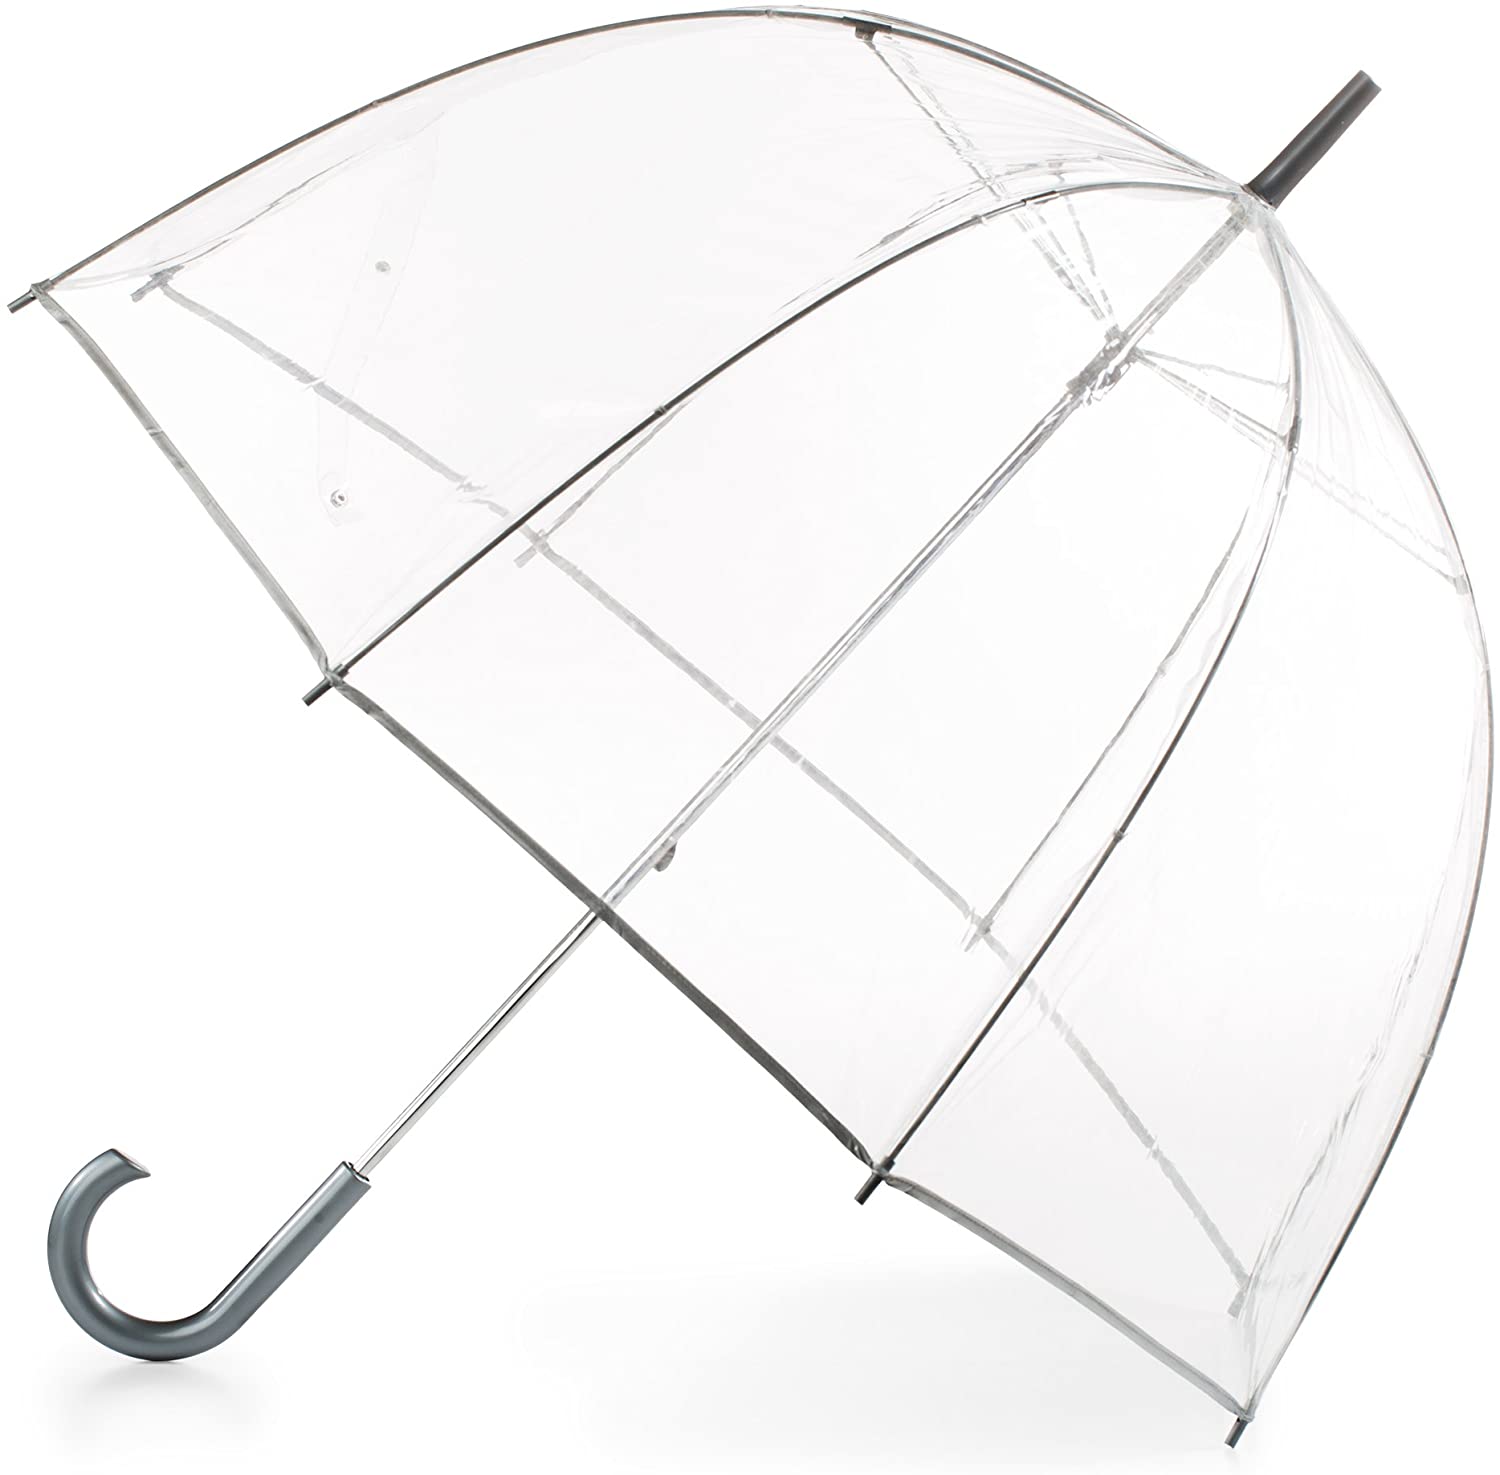 Auto Open/Close Button Sailor Skull Logo Design Compact Travel Umbrella with Windproof Double Canopy Construction 